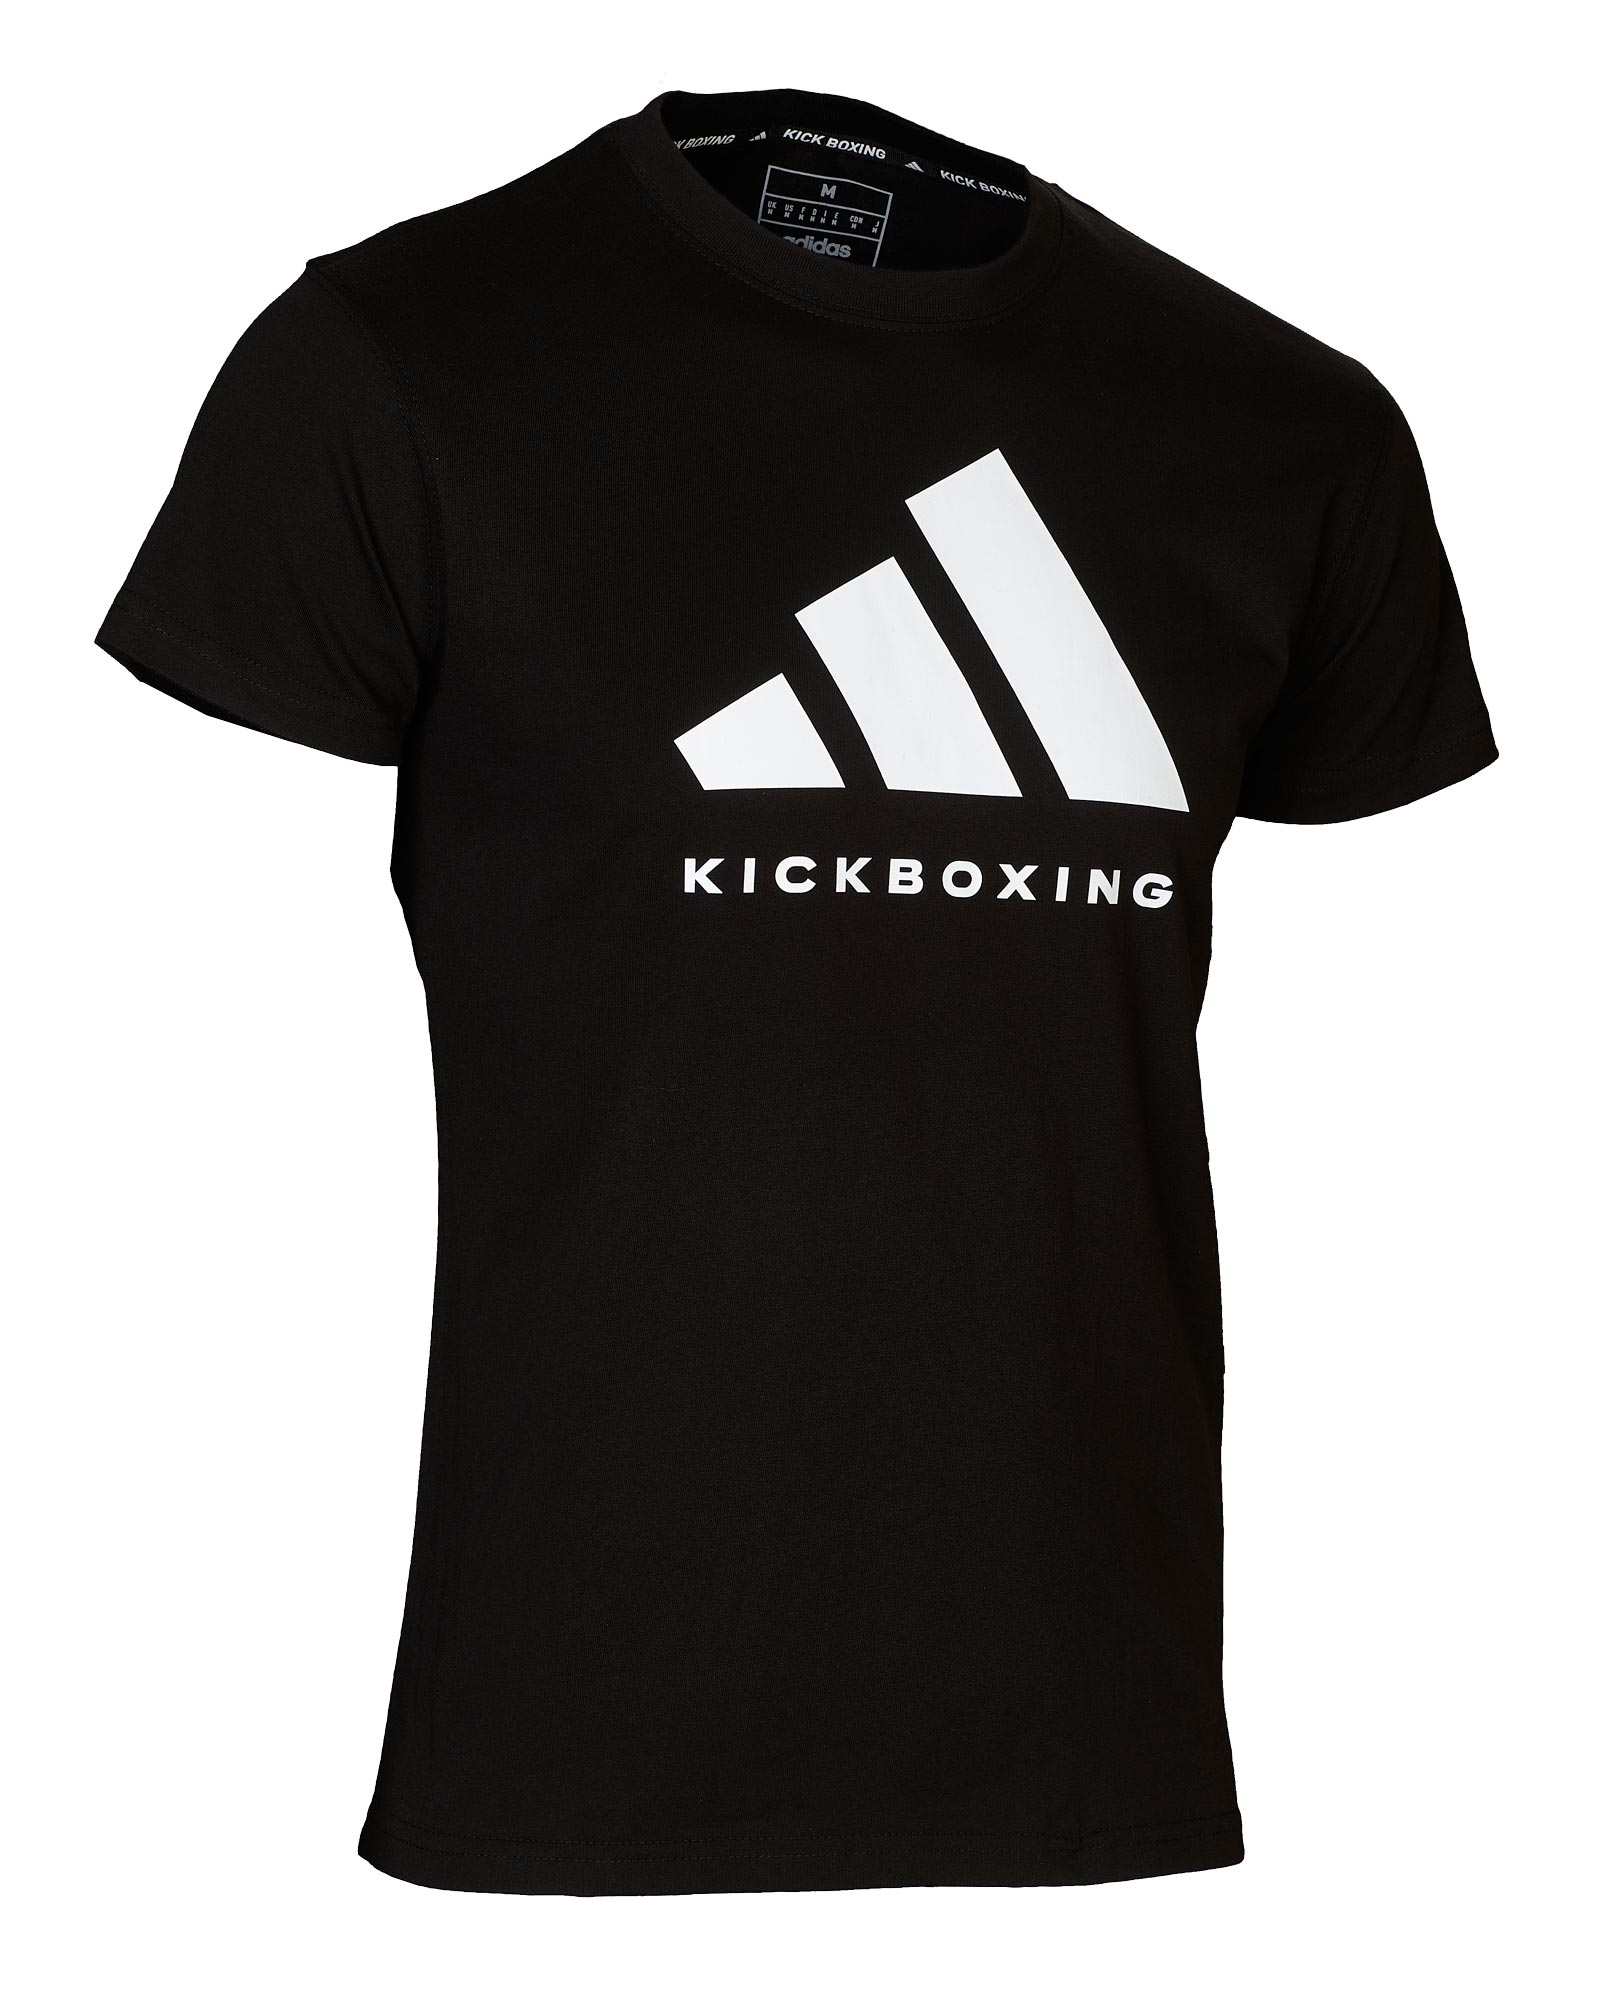 adidas Community Graphic Tee Kickboxing schwarz adiCLTS24-KB